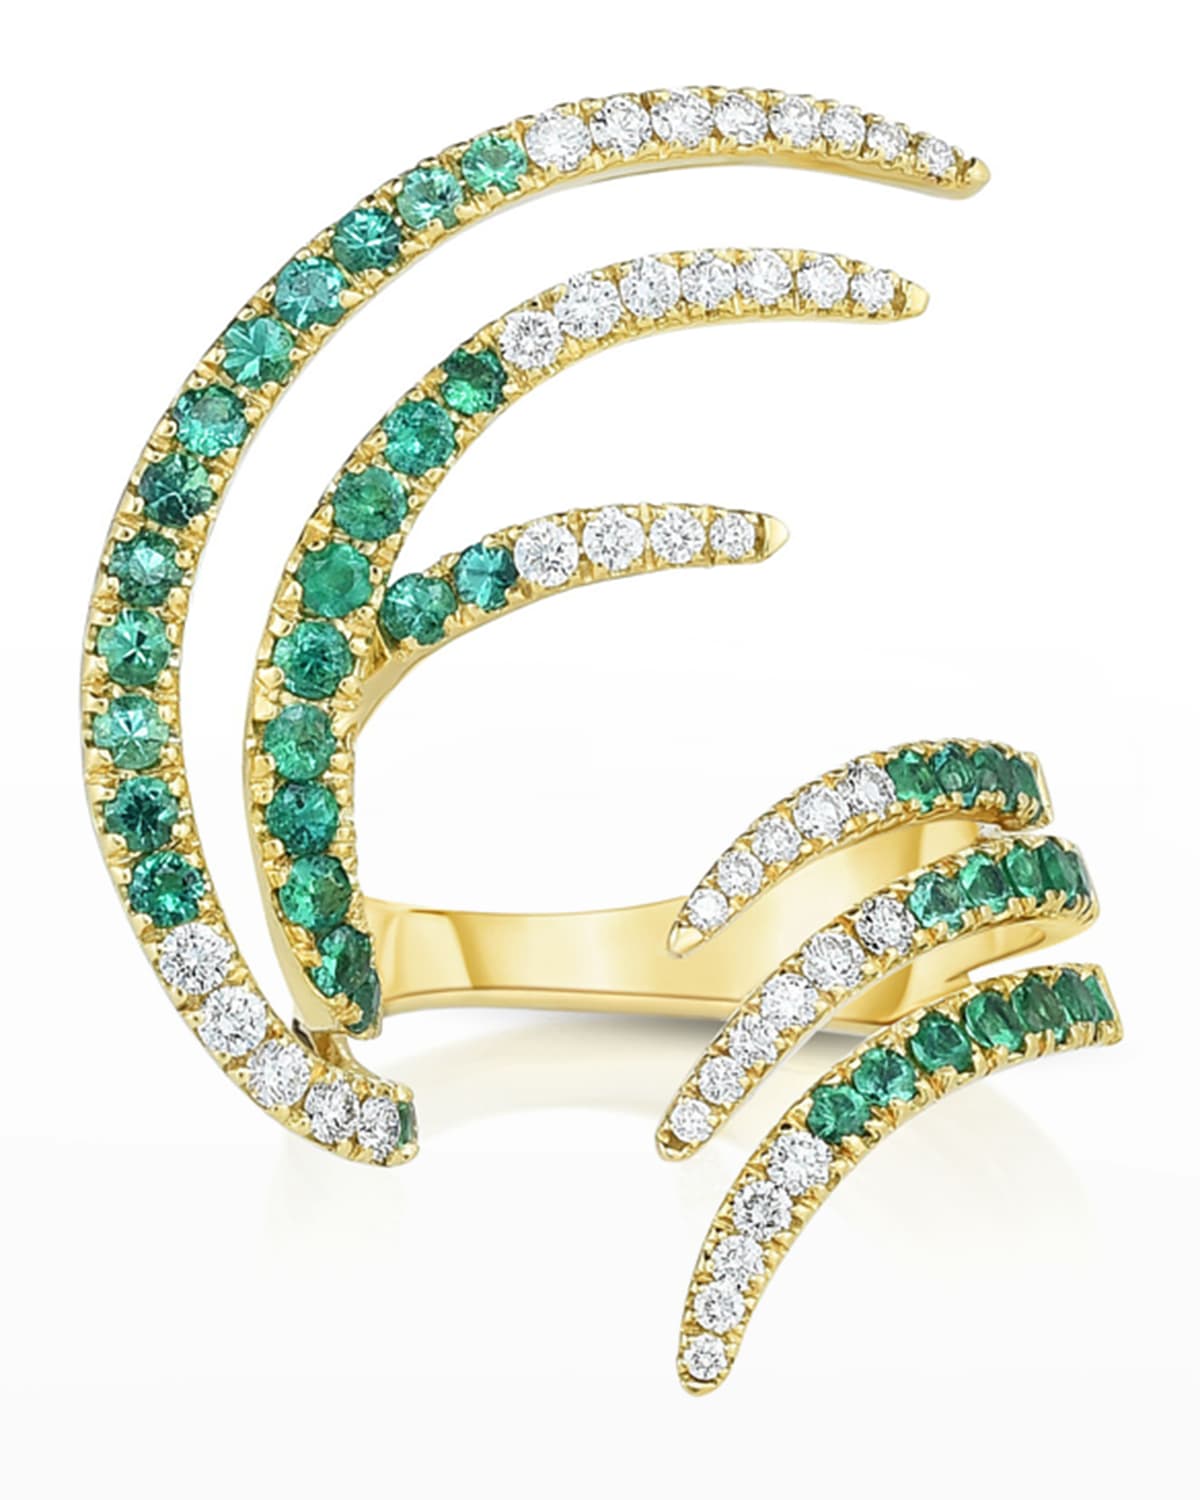 Fern Freeman Jewelry 18K Emerald and Diamond Open Wing Ring